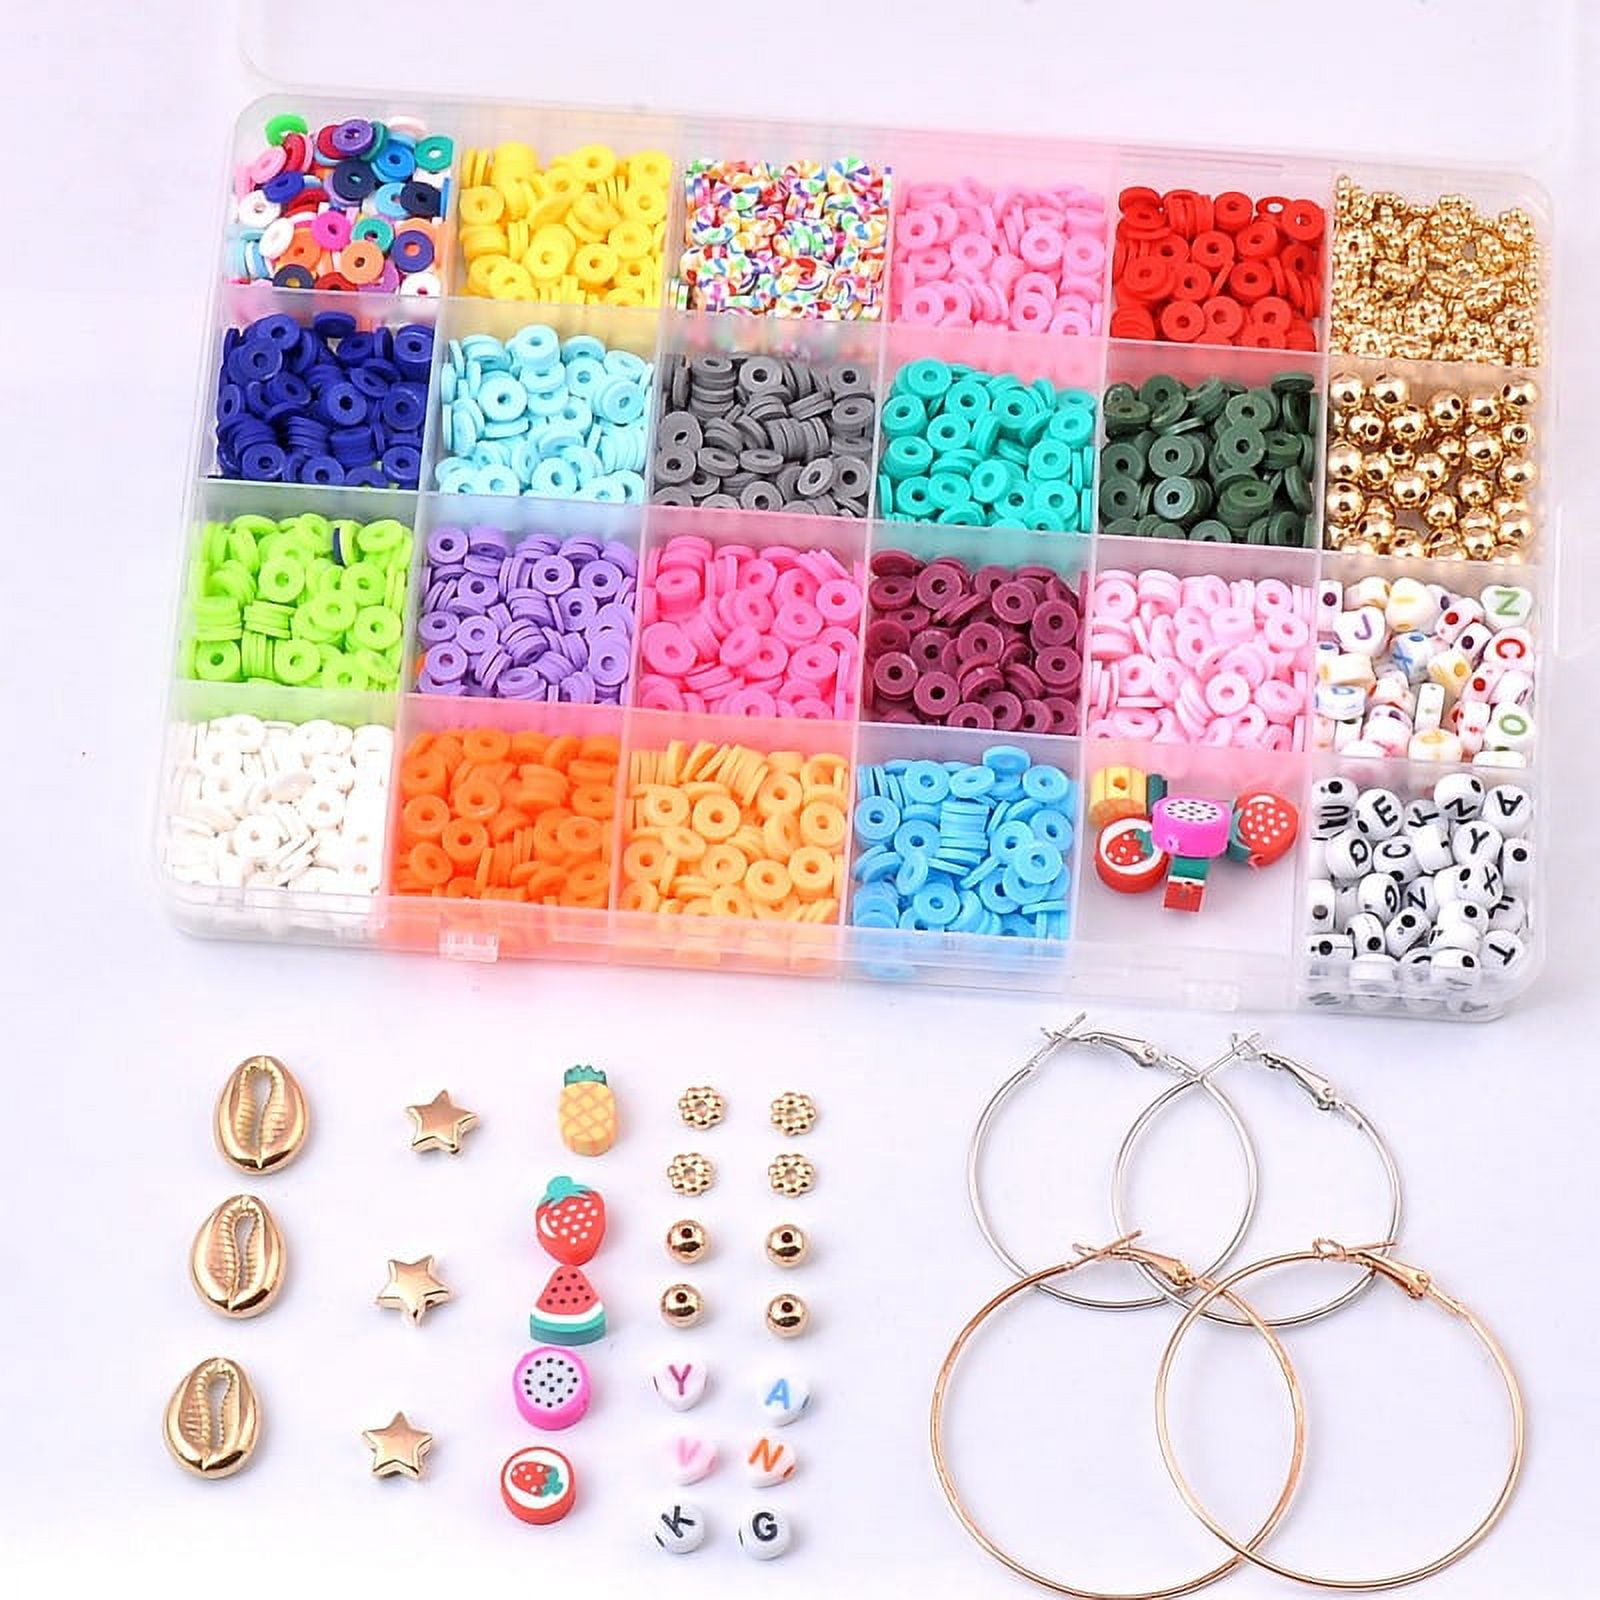 OCARDI 6615 Pcs Clay Beads Bracelet Making Kit,Beads for Jewelry Making Kit with Flat P